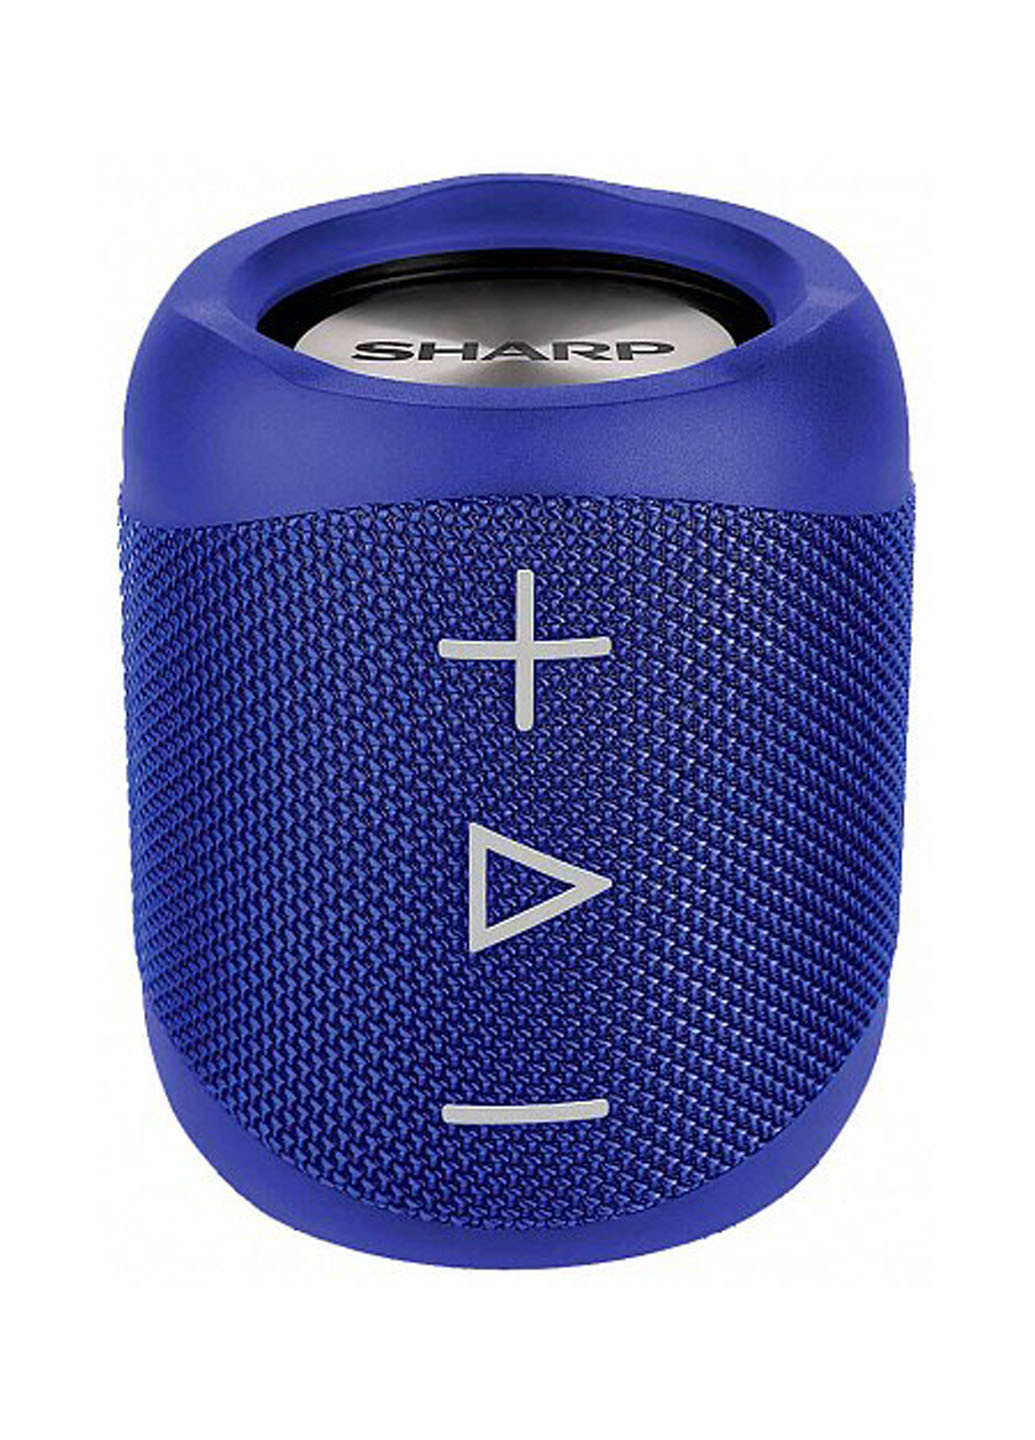 Портативная акустика Sharp compact wireless speaker blue (gx-bt180(bl)) (143197288)